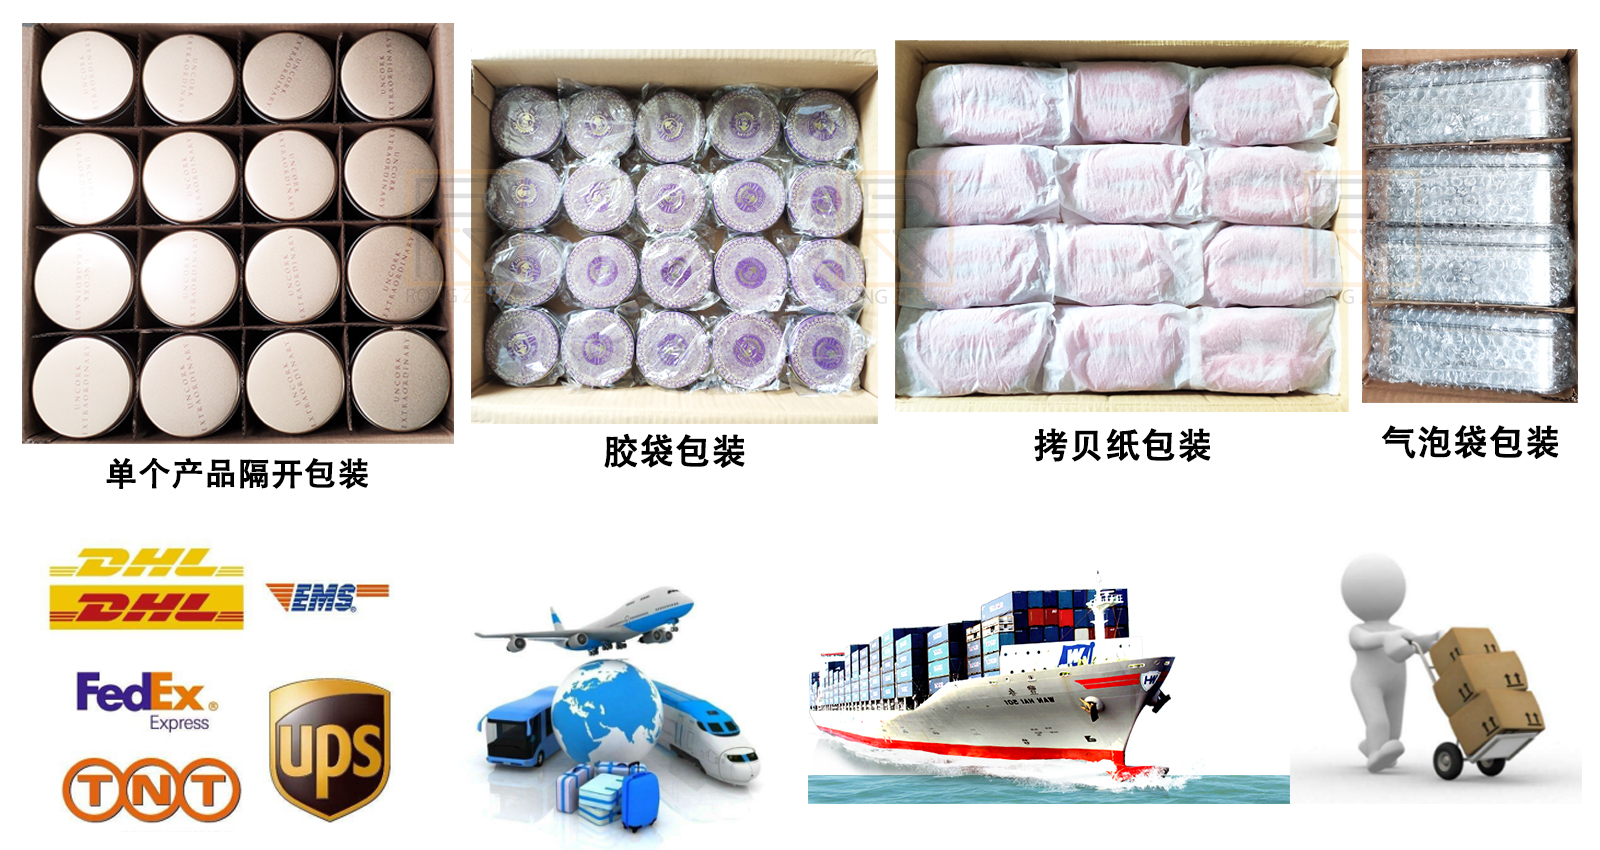 Customized hexagonal tea packaging iron box for manufacturers, small green citrus and Pu tea packaging box, irregular tin can